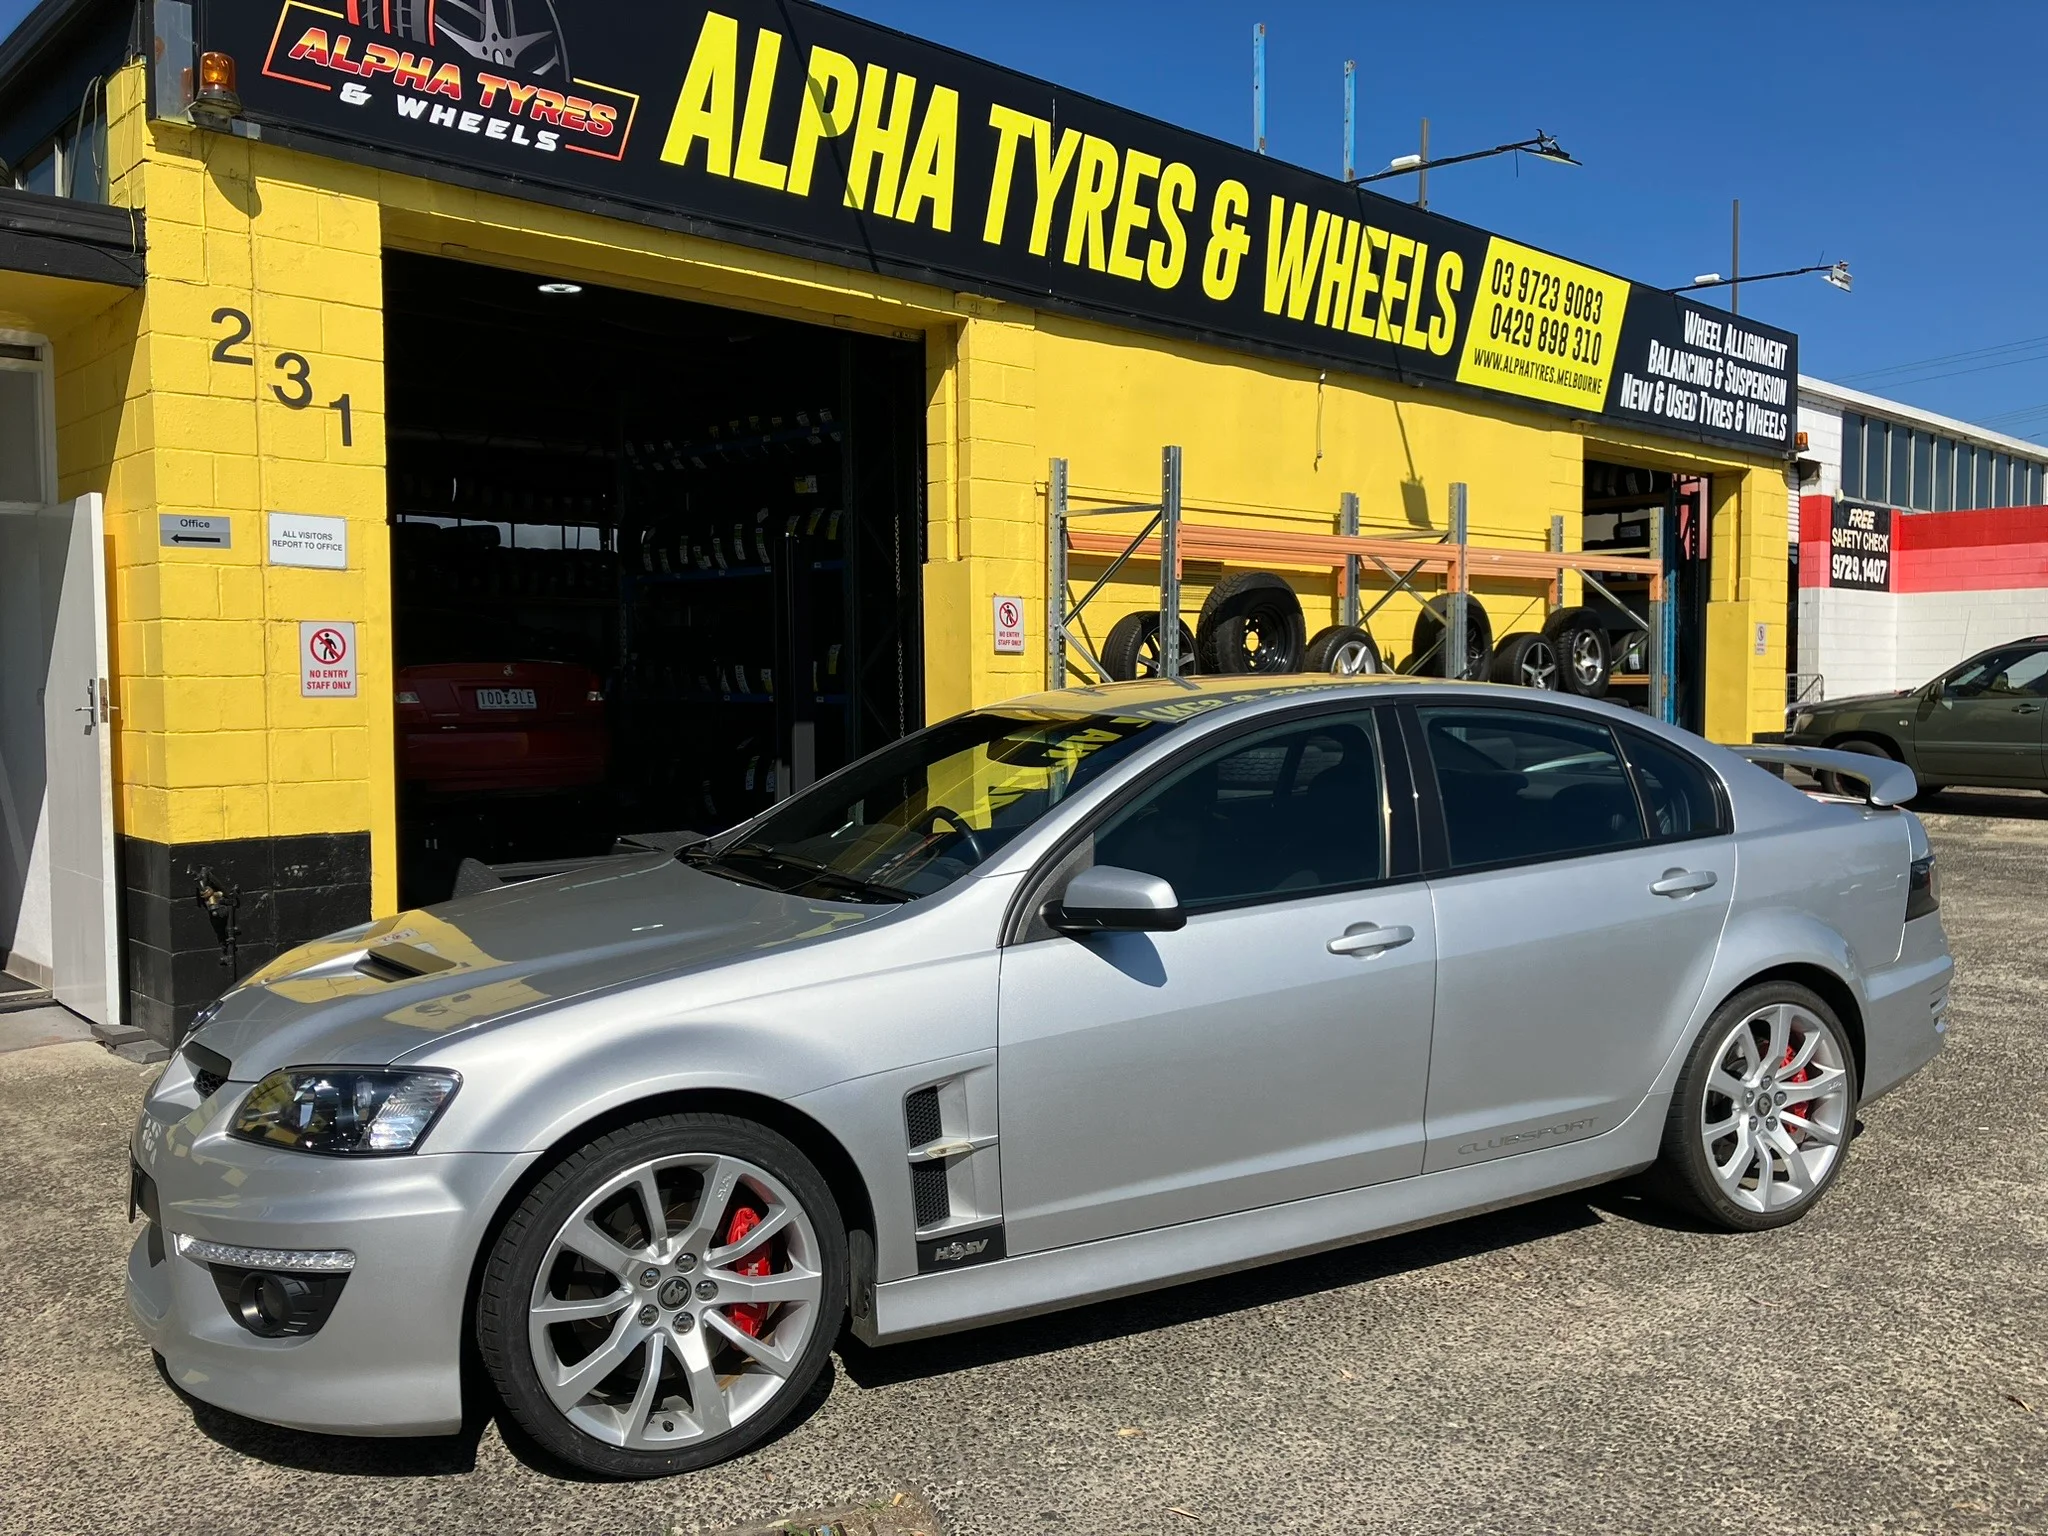 Alpha tyres and wheels shop kilsyth costumers car